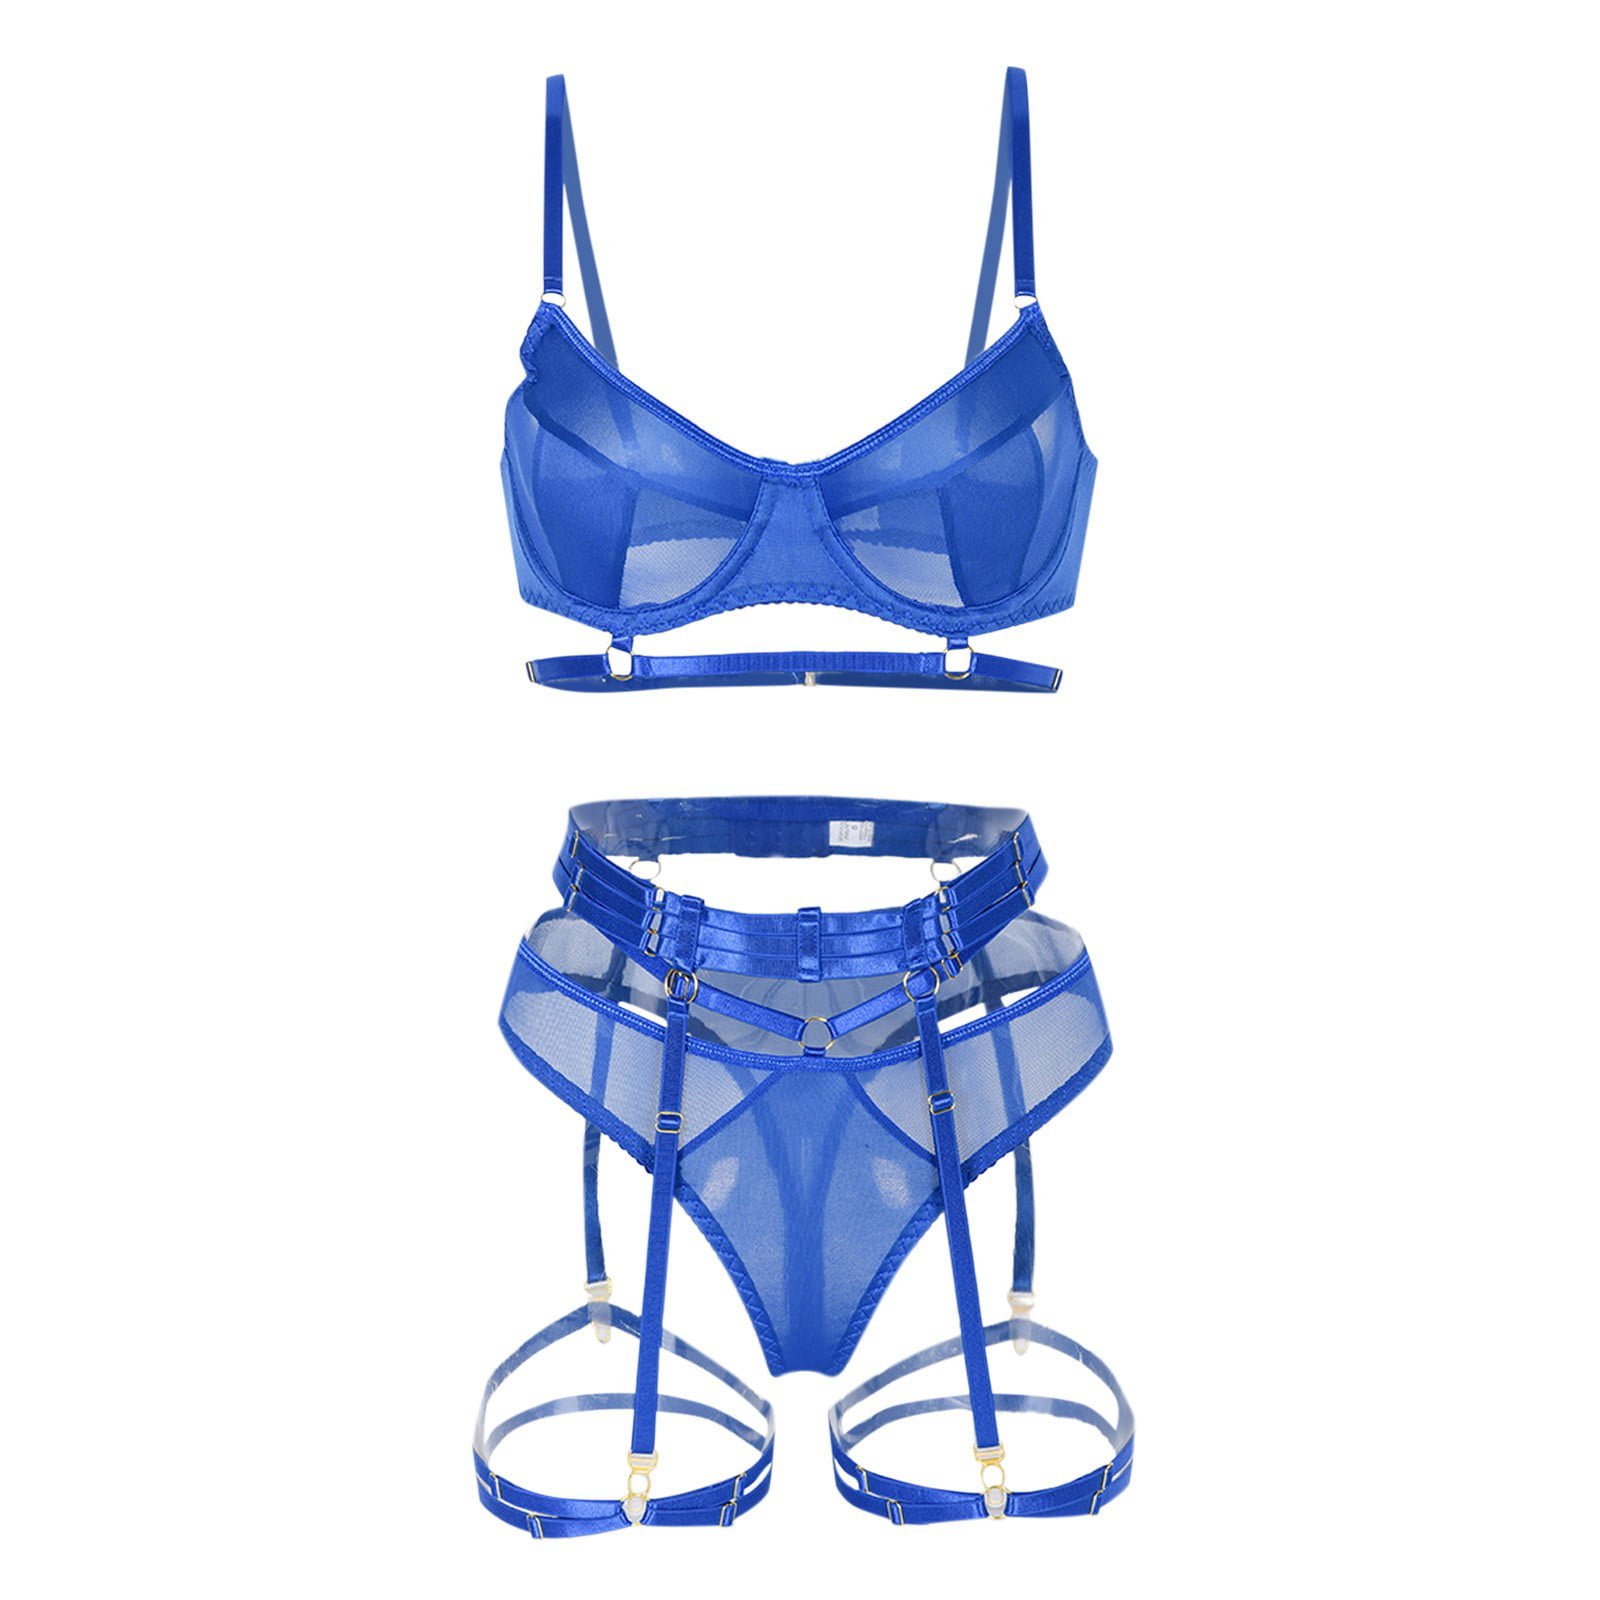 Gubotare Lingerie For Women Plus Size Women Lingerie Set with Garter Bra  and Panty Lace Underwire Lingerie Sets,Blue XL 